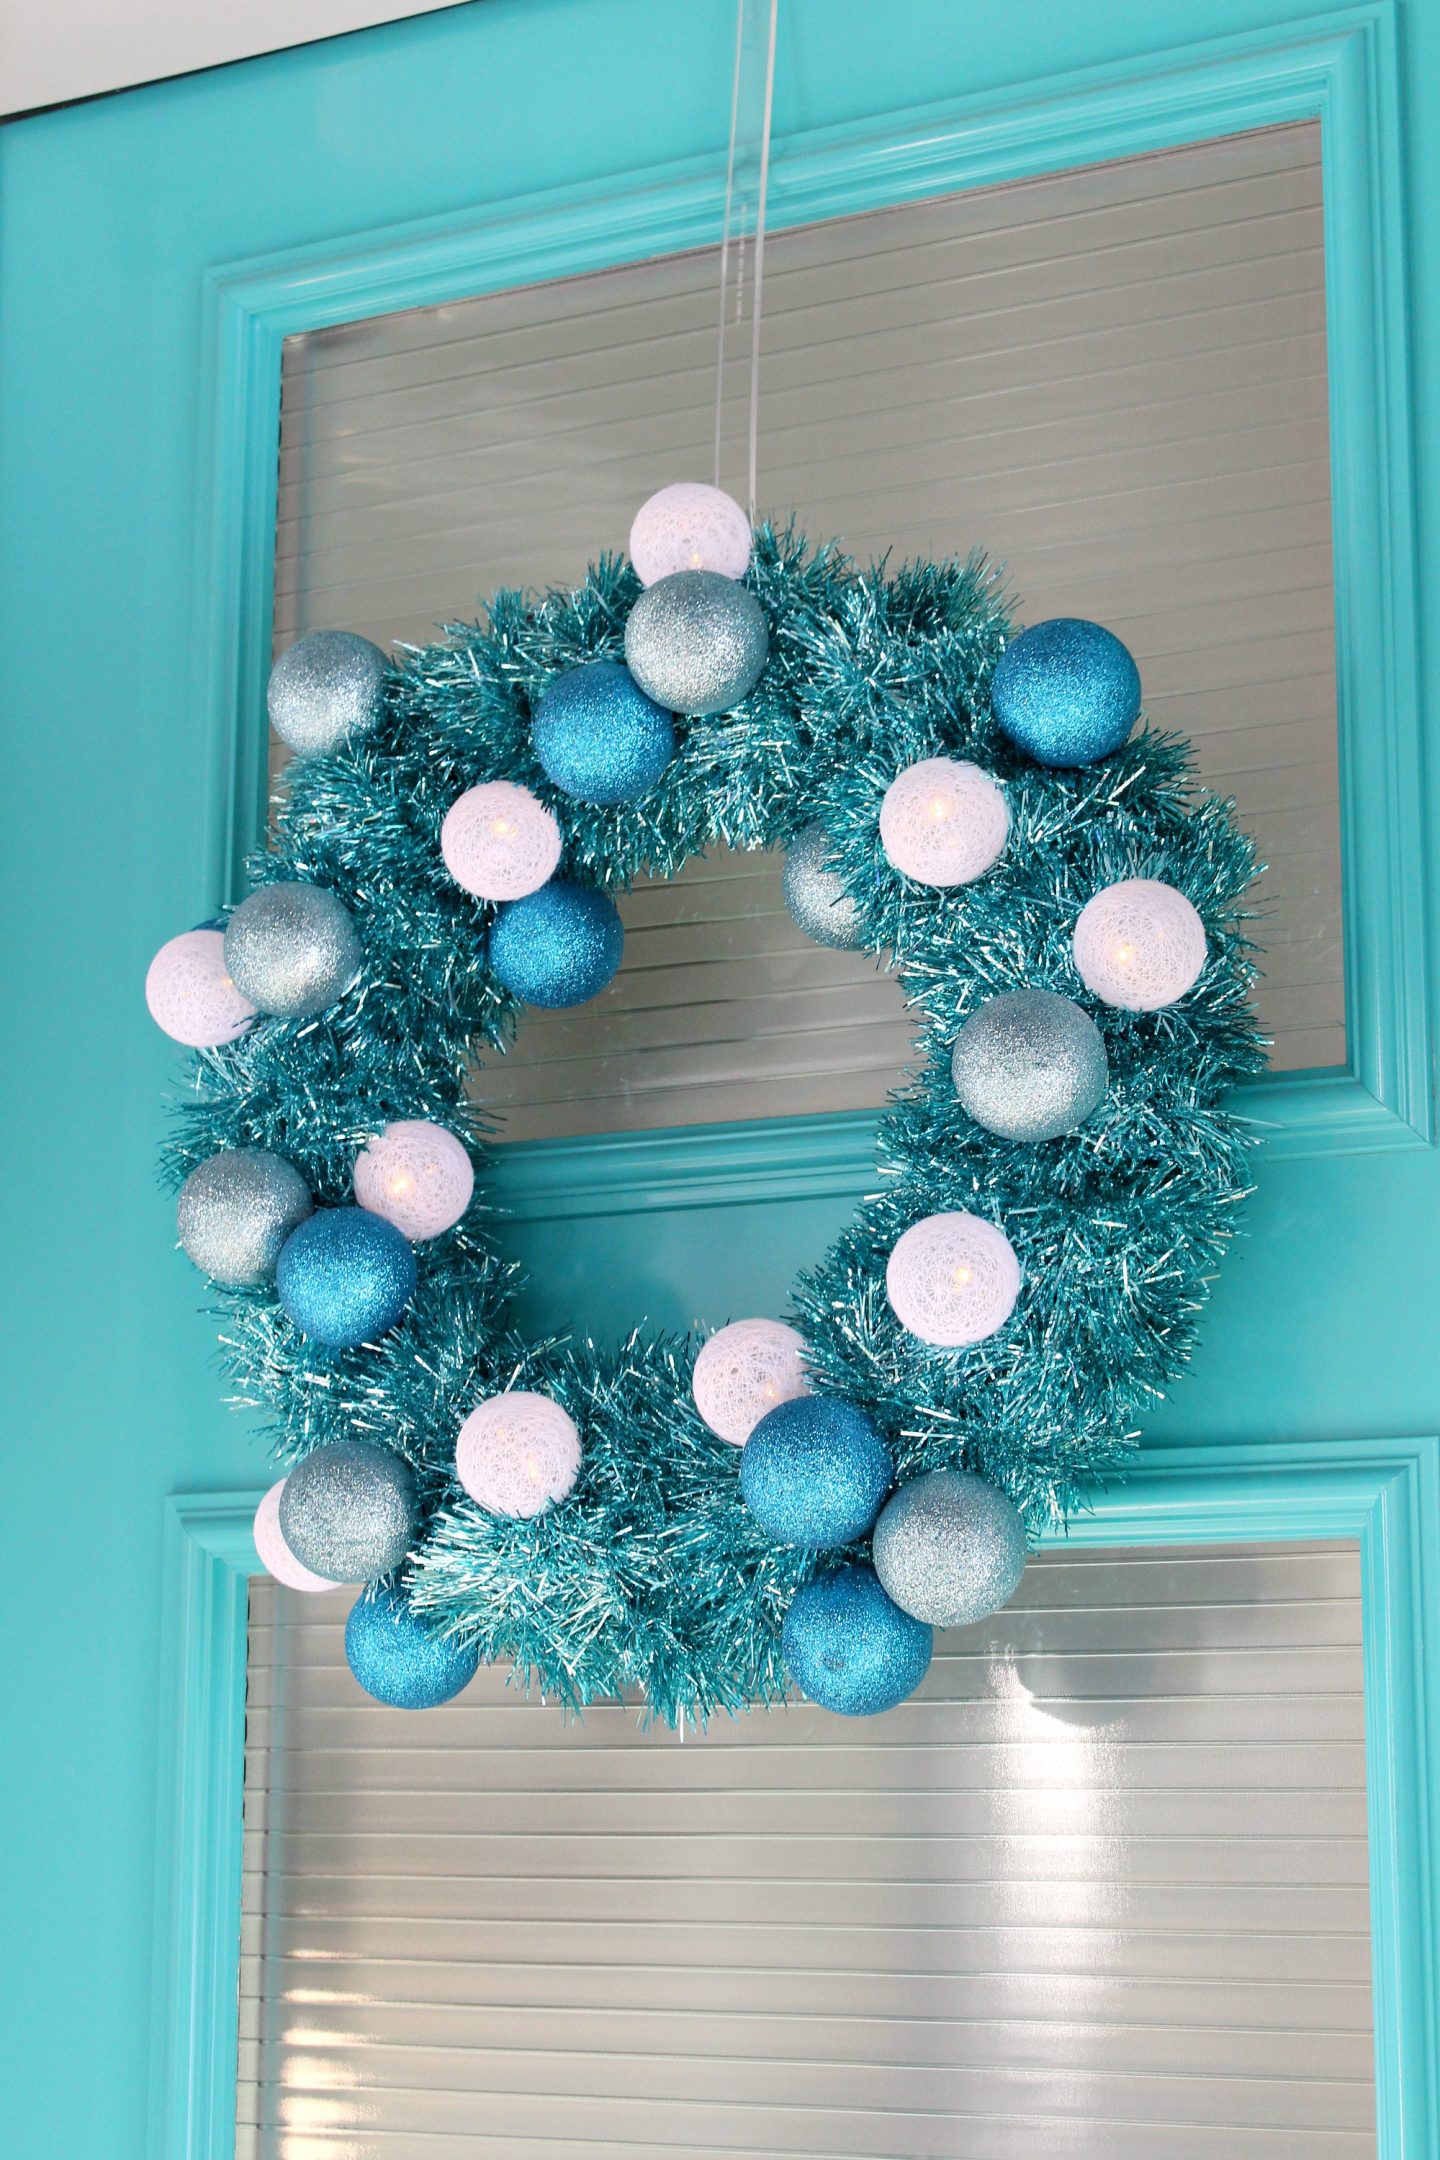 DIY Tinsel Wreath with Retro Vibes #diychristmas #tinsel #tinselwreath #retrochristmas